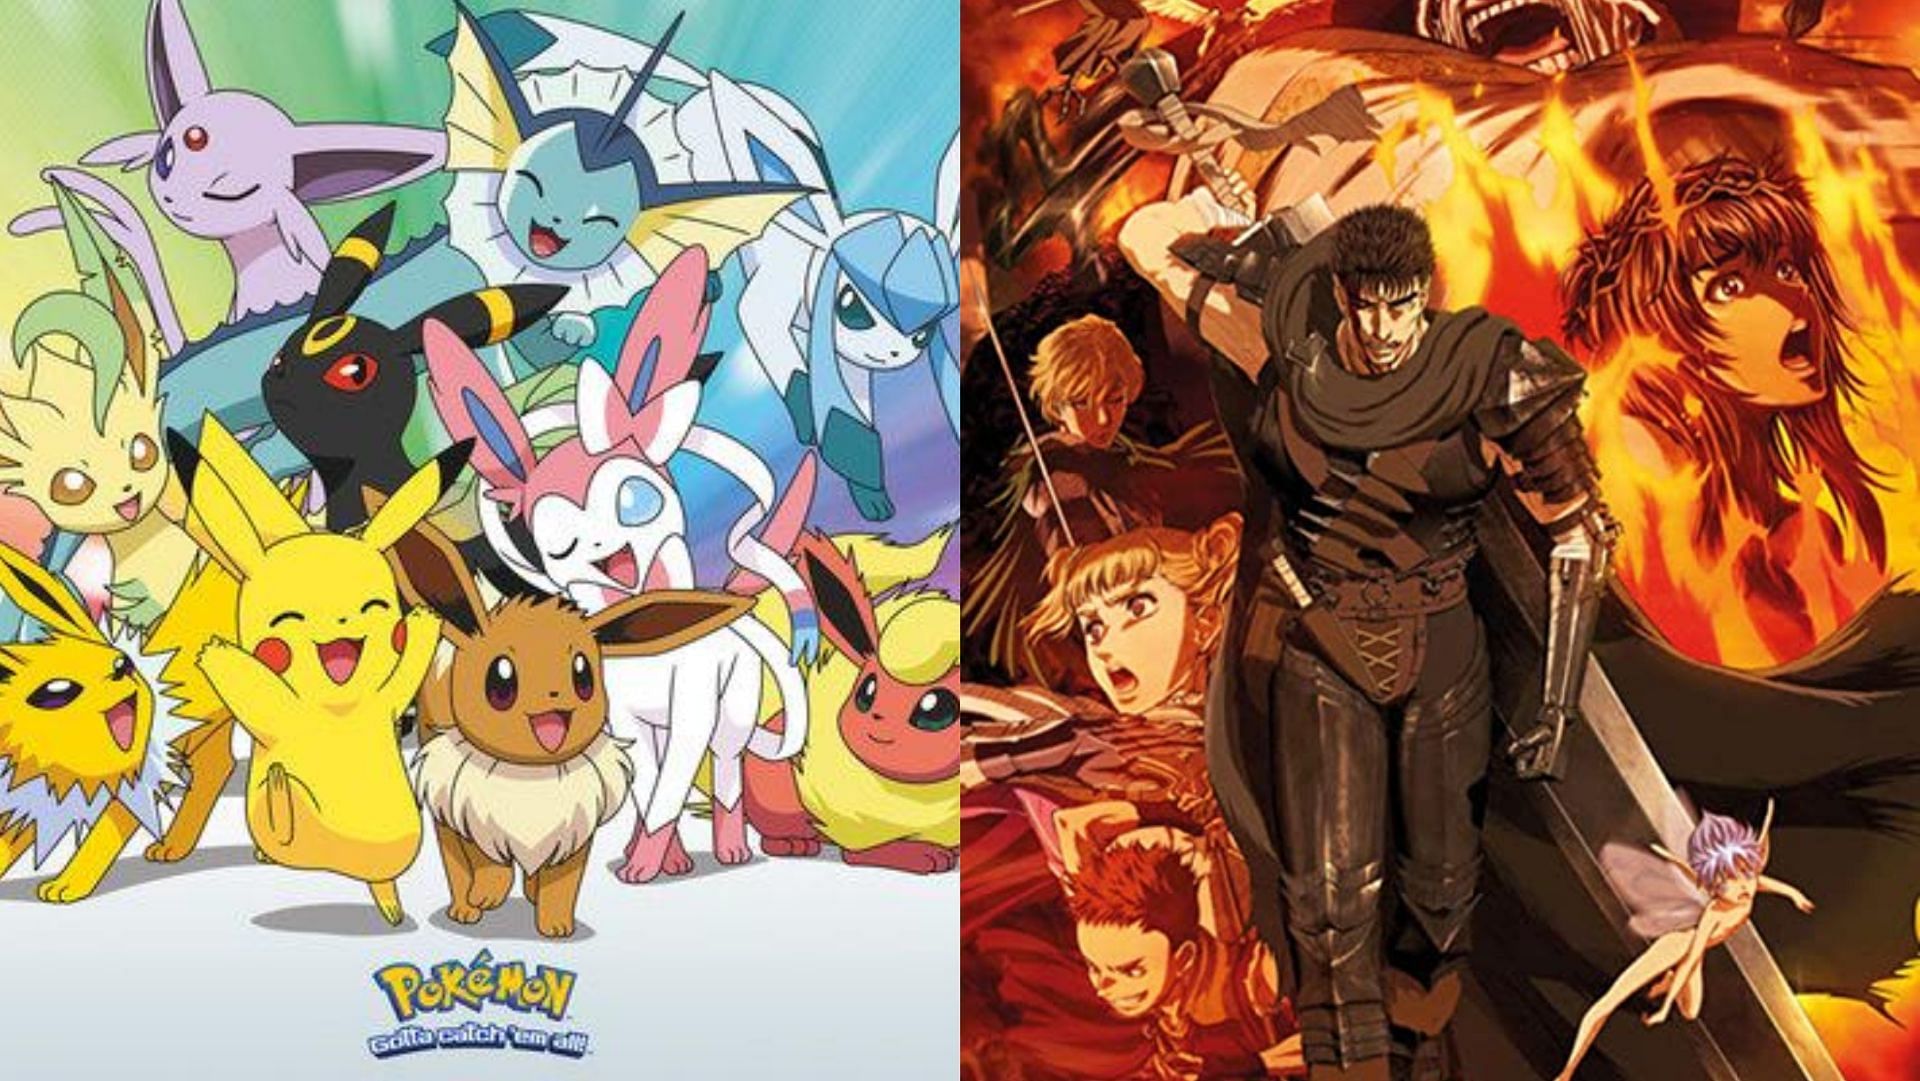 Official posters of the anime Pokemon and Berserk (Image via Sportskeeda)